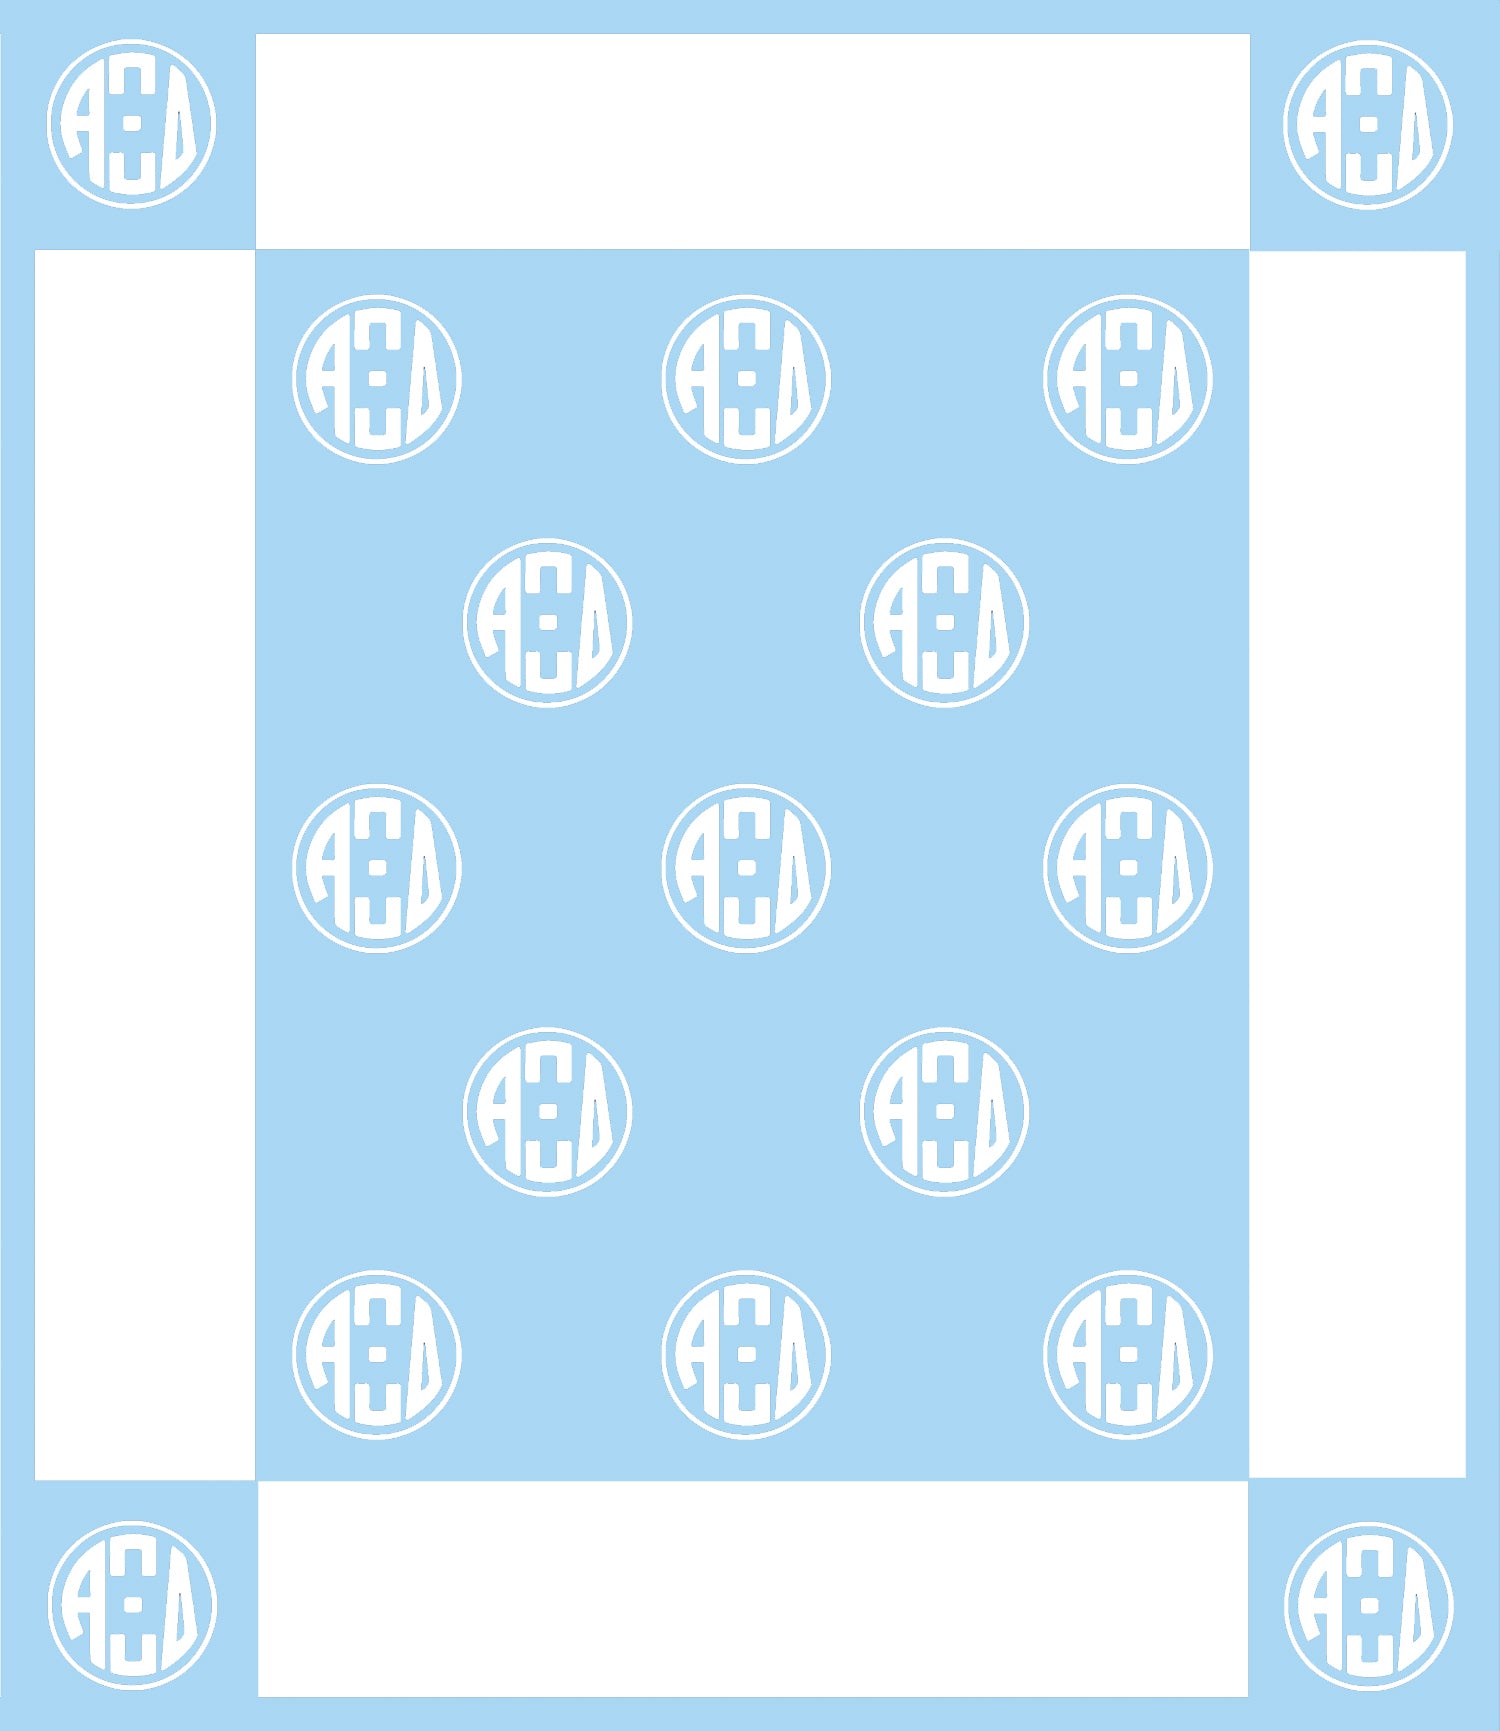 Alpha Xi Delta Circle Monogram Blanket